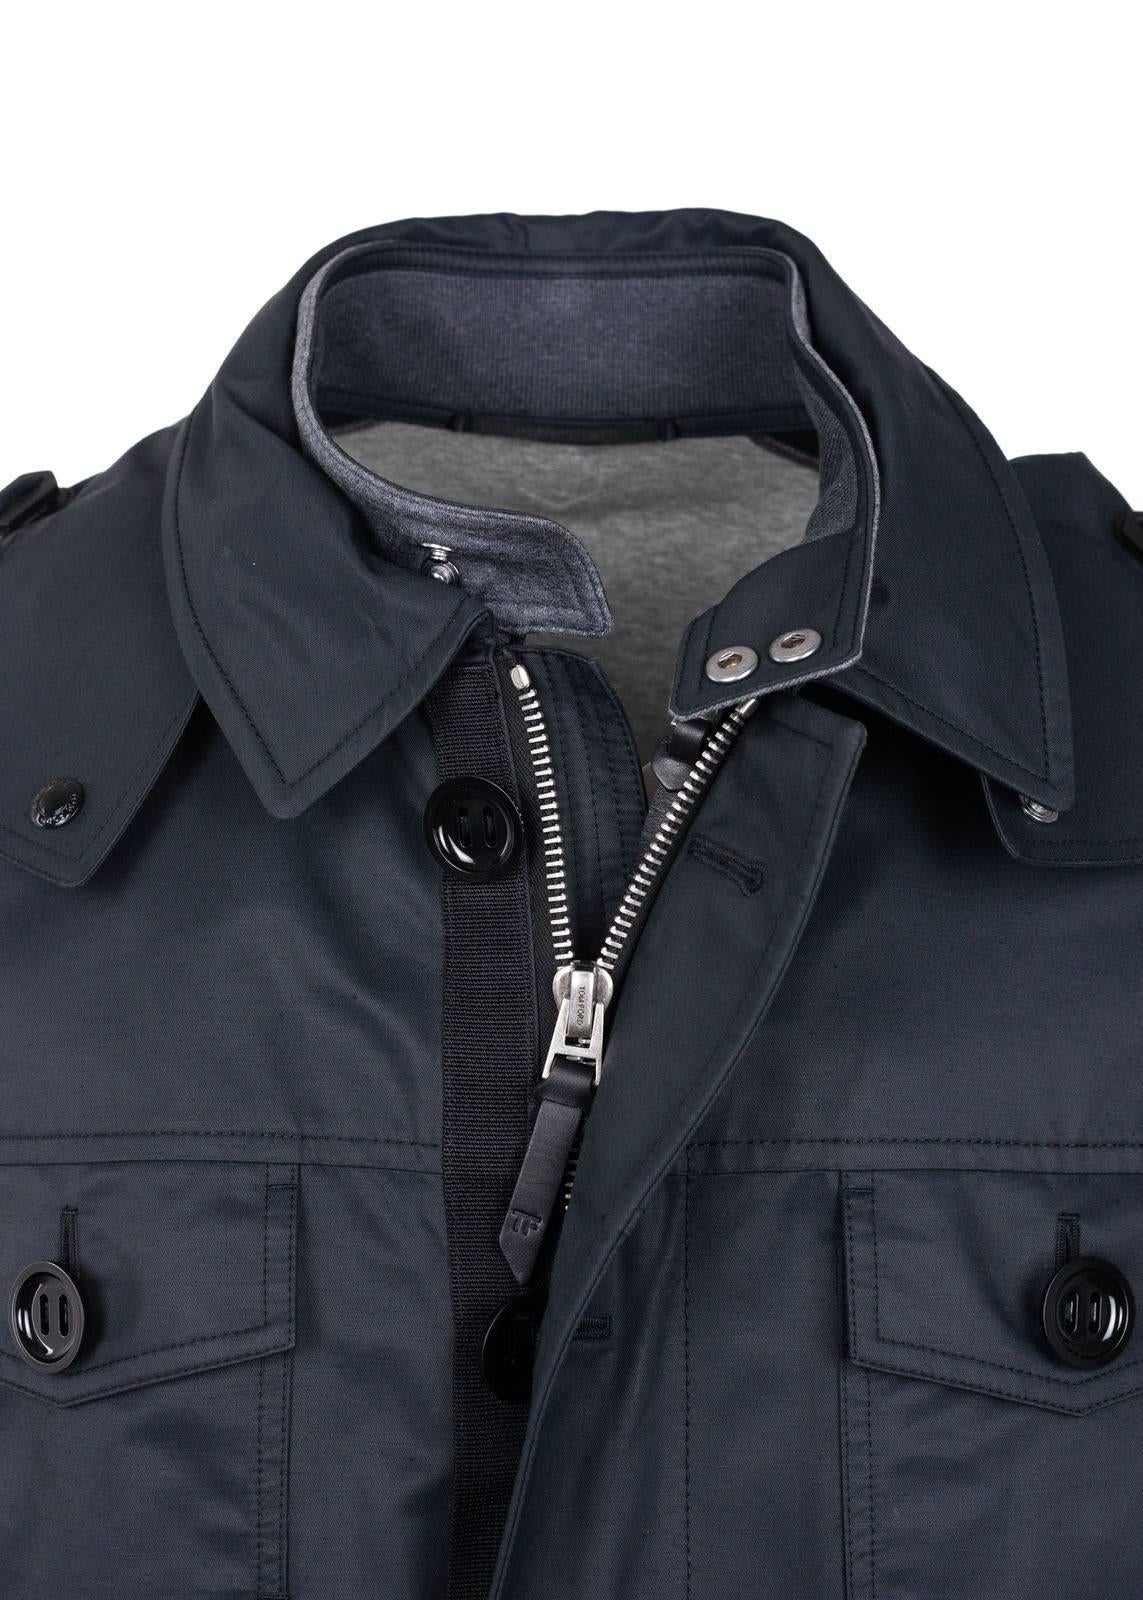 Black Tom Ford Blue Cotton Blend Detachable Sweater Utility Jacket Sz 48/38~RTL $4190 For Sale